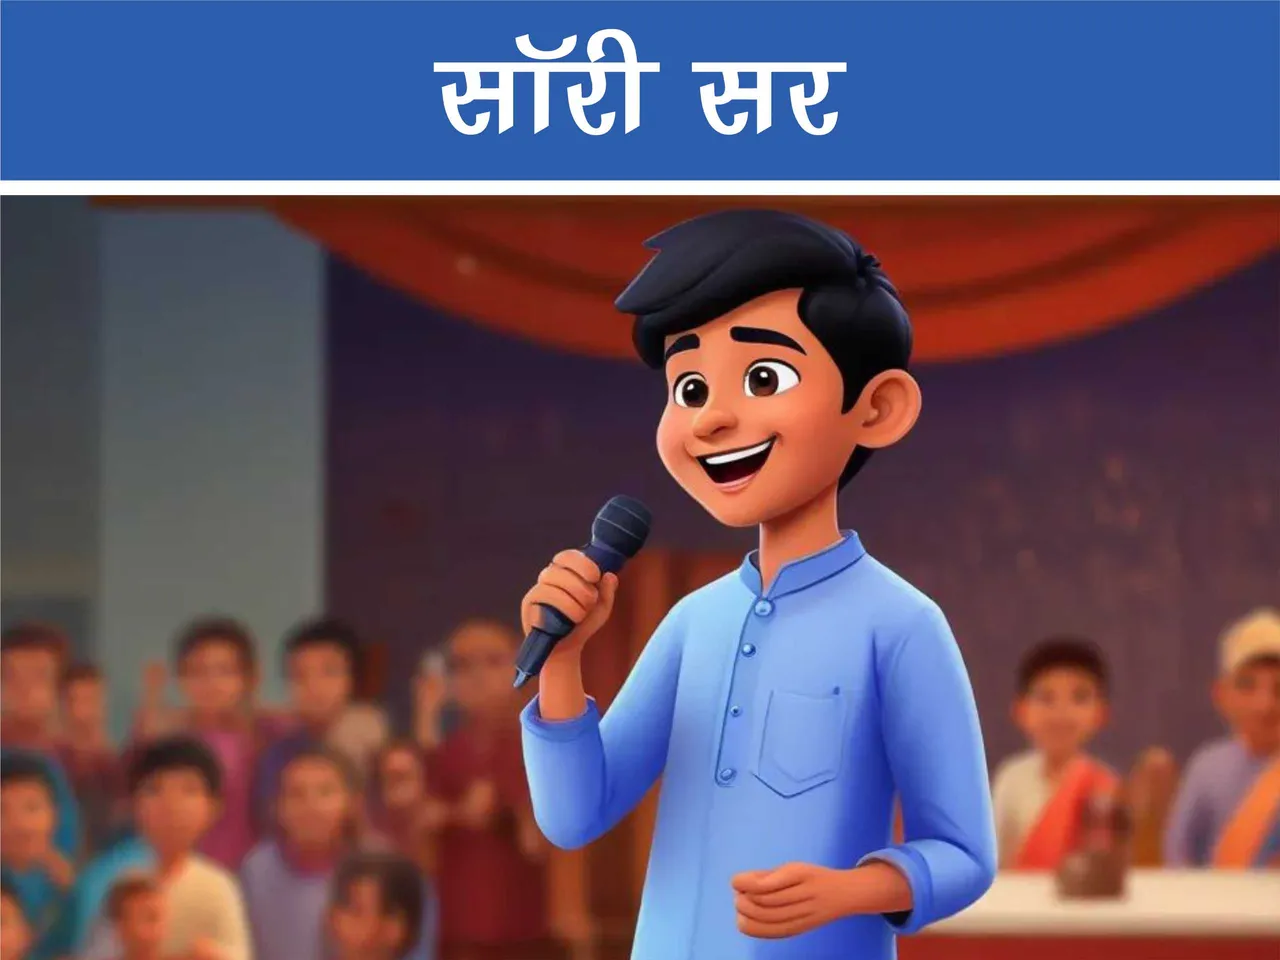 School boy giving speech on stage cartoon image